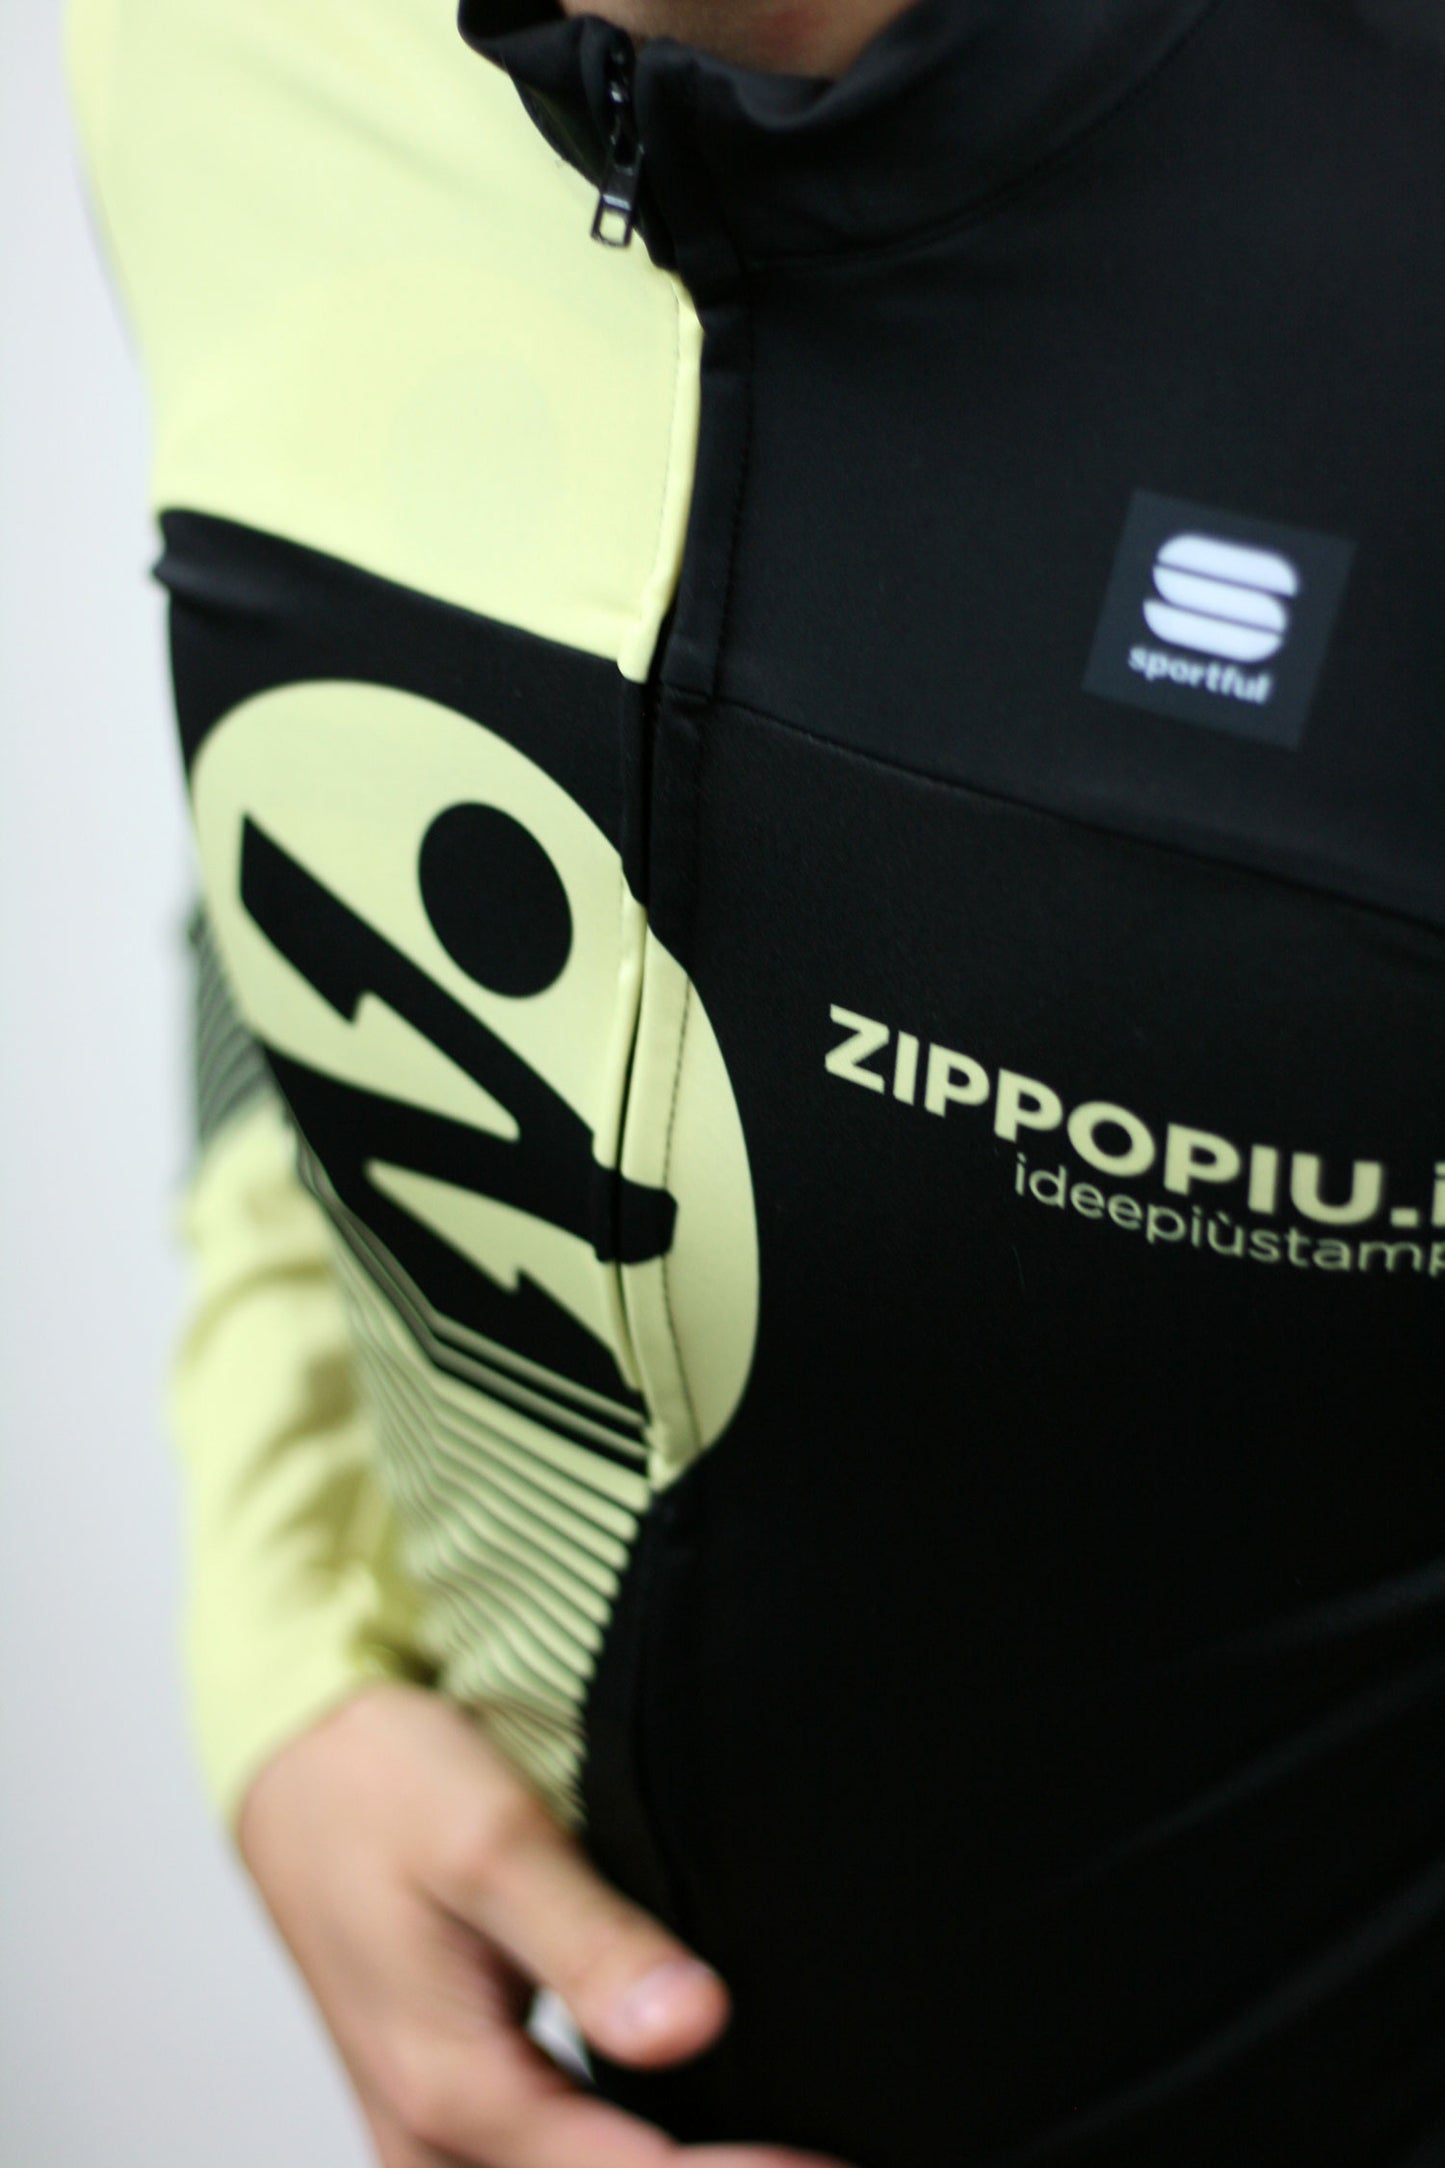 Completo INVERNALE  - Maglia + Pantaloncini + Gambalotto ZIPPOPIU.it Cycling Team